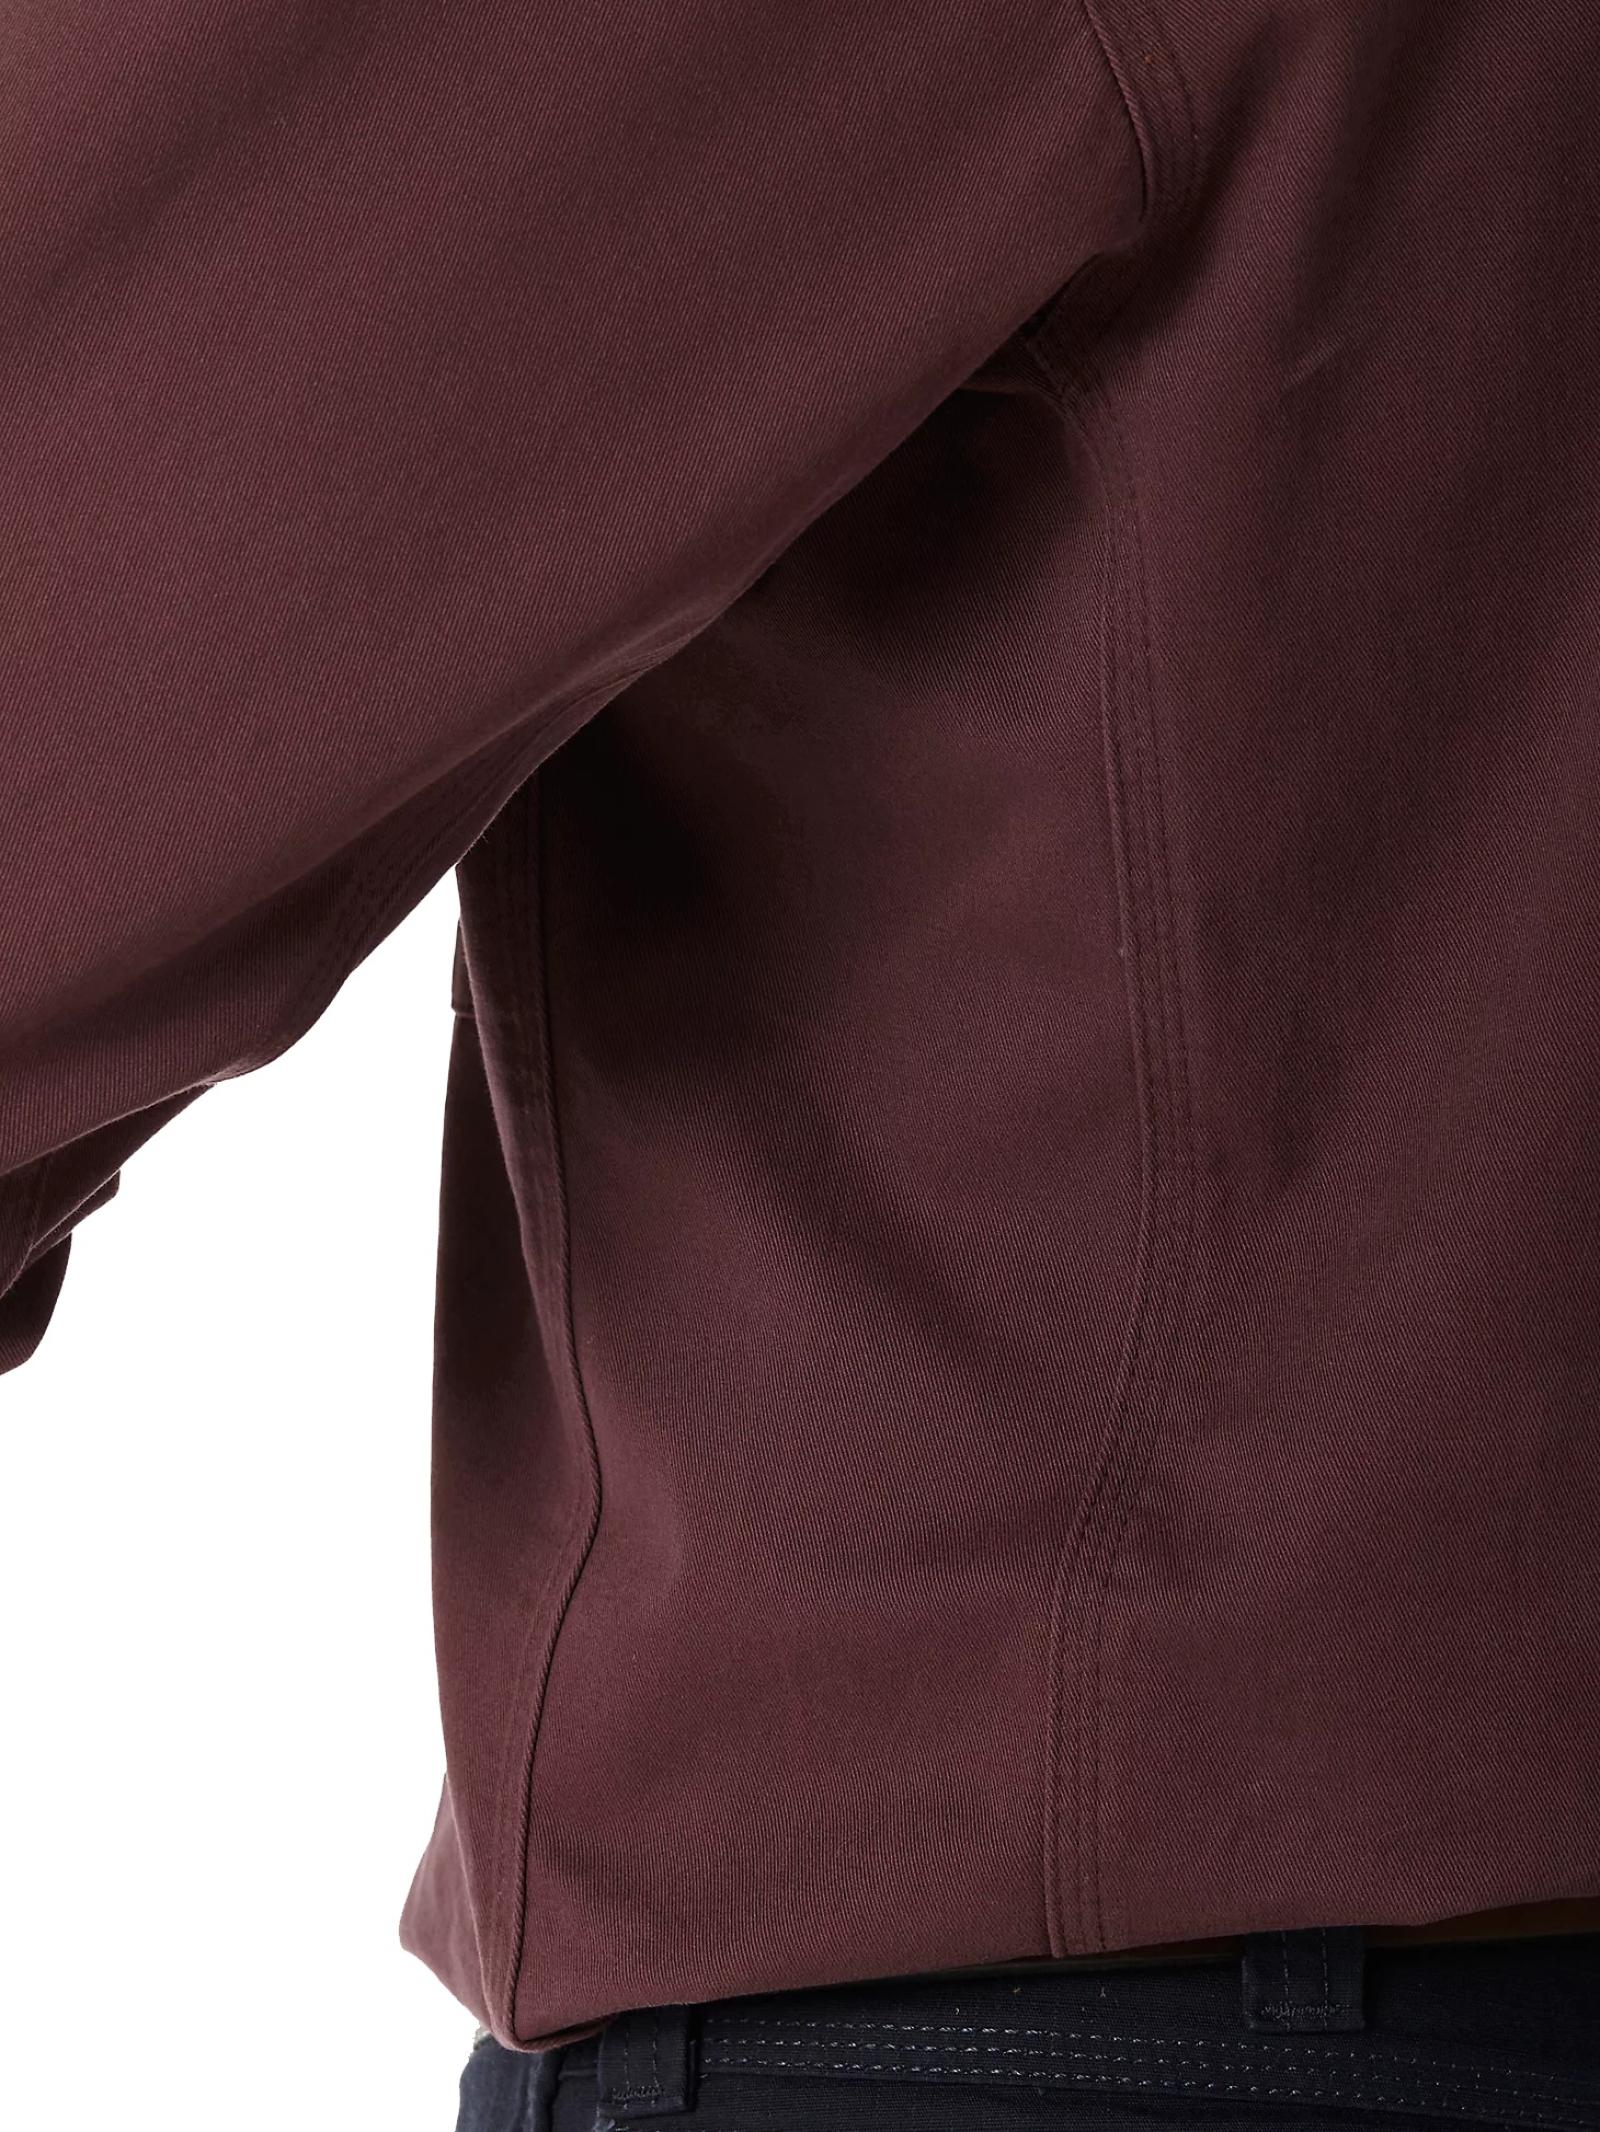 Wrangler Men's Riggs Workwear Long Sleeve Button Down